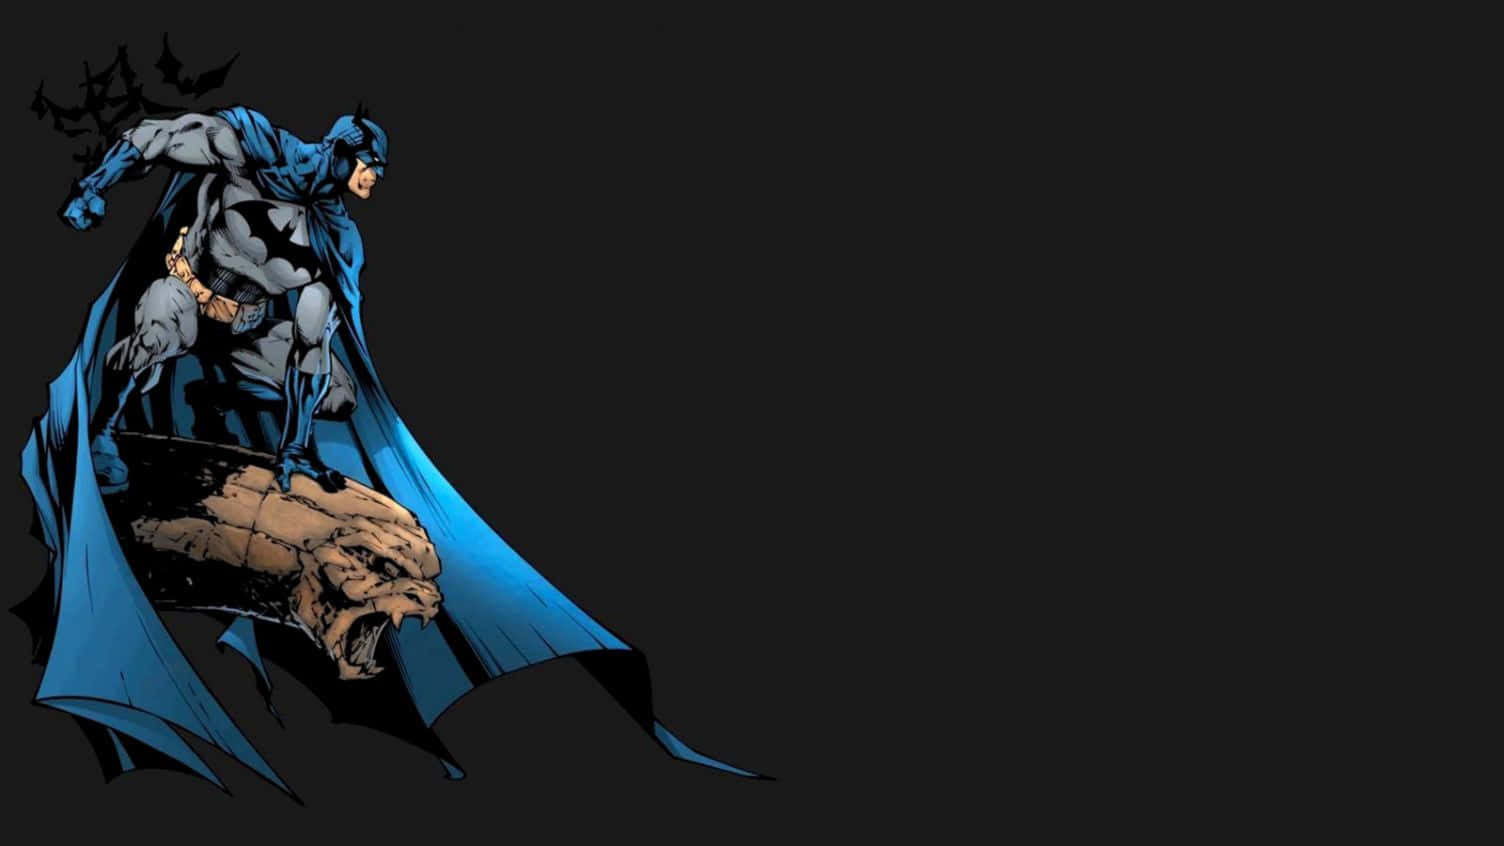 Batman Aesthetic On Gargoyle Statue Wallpaper